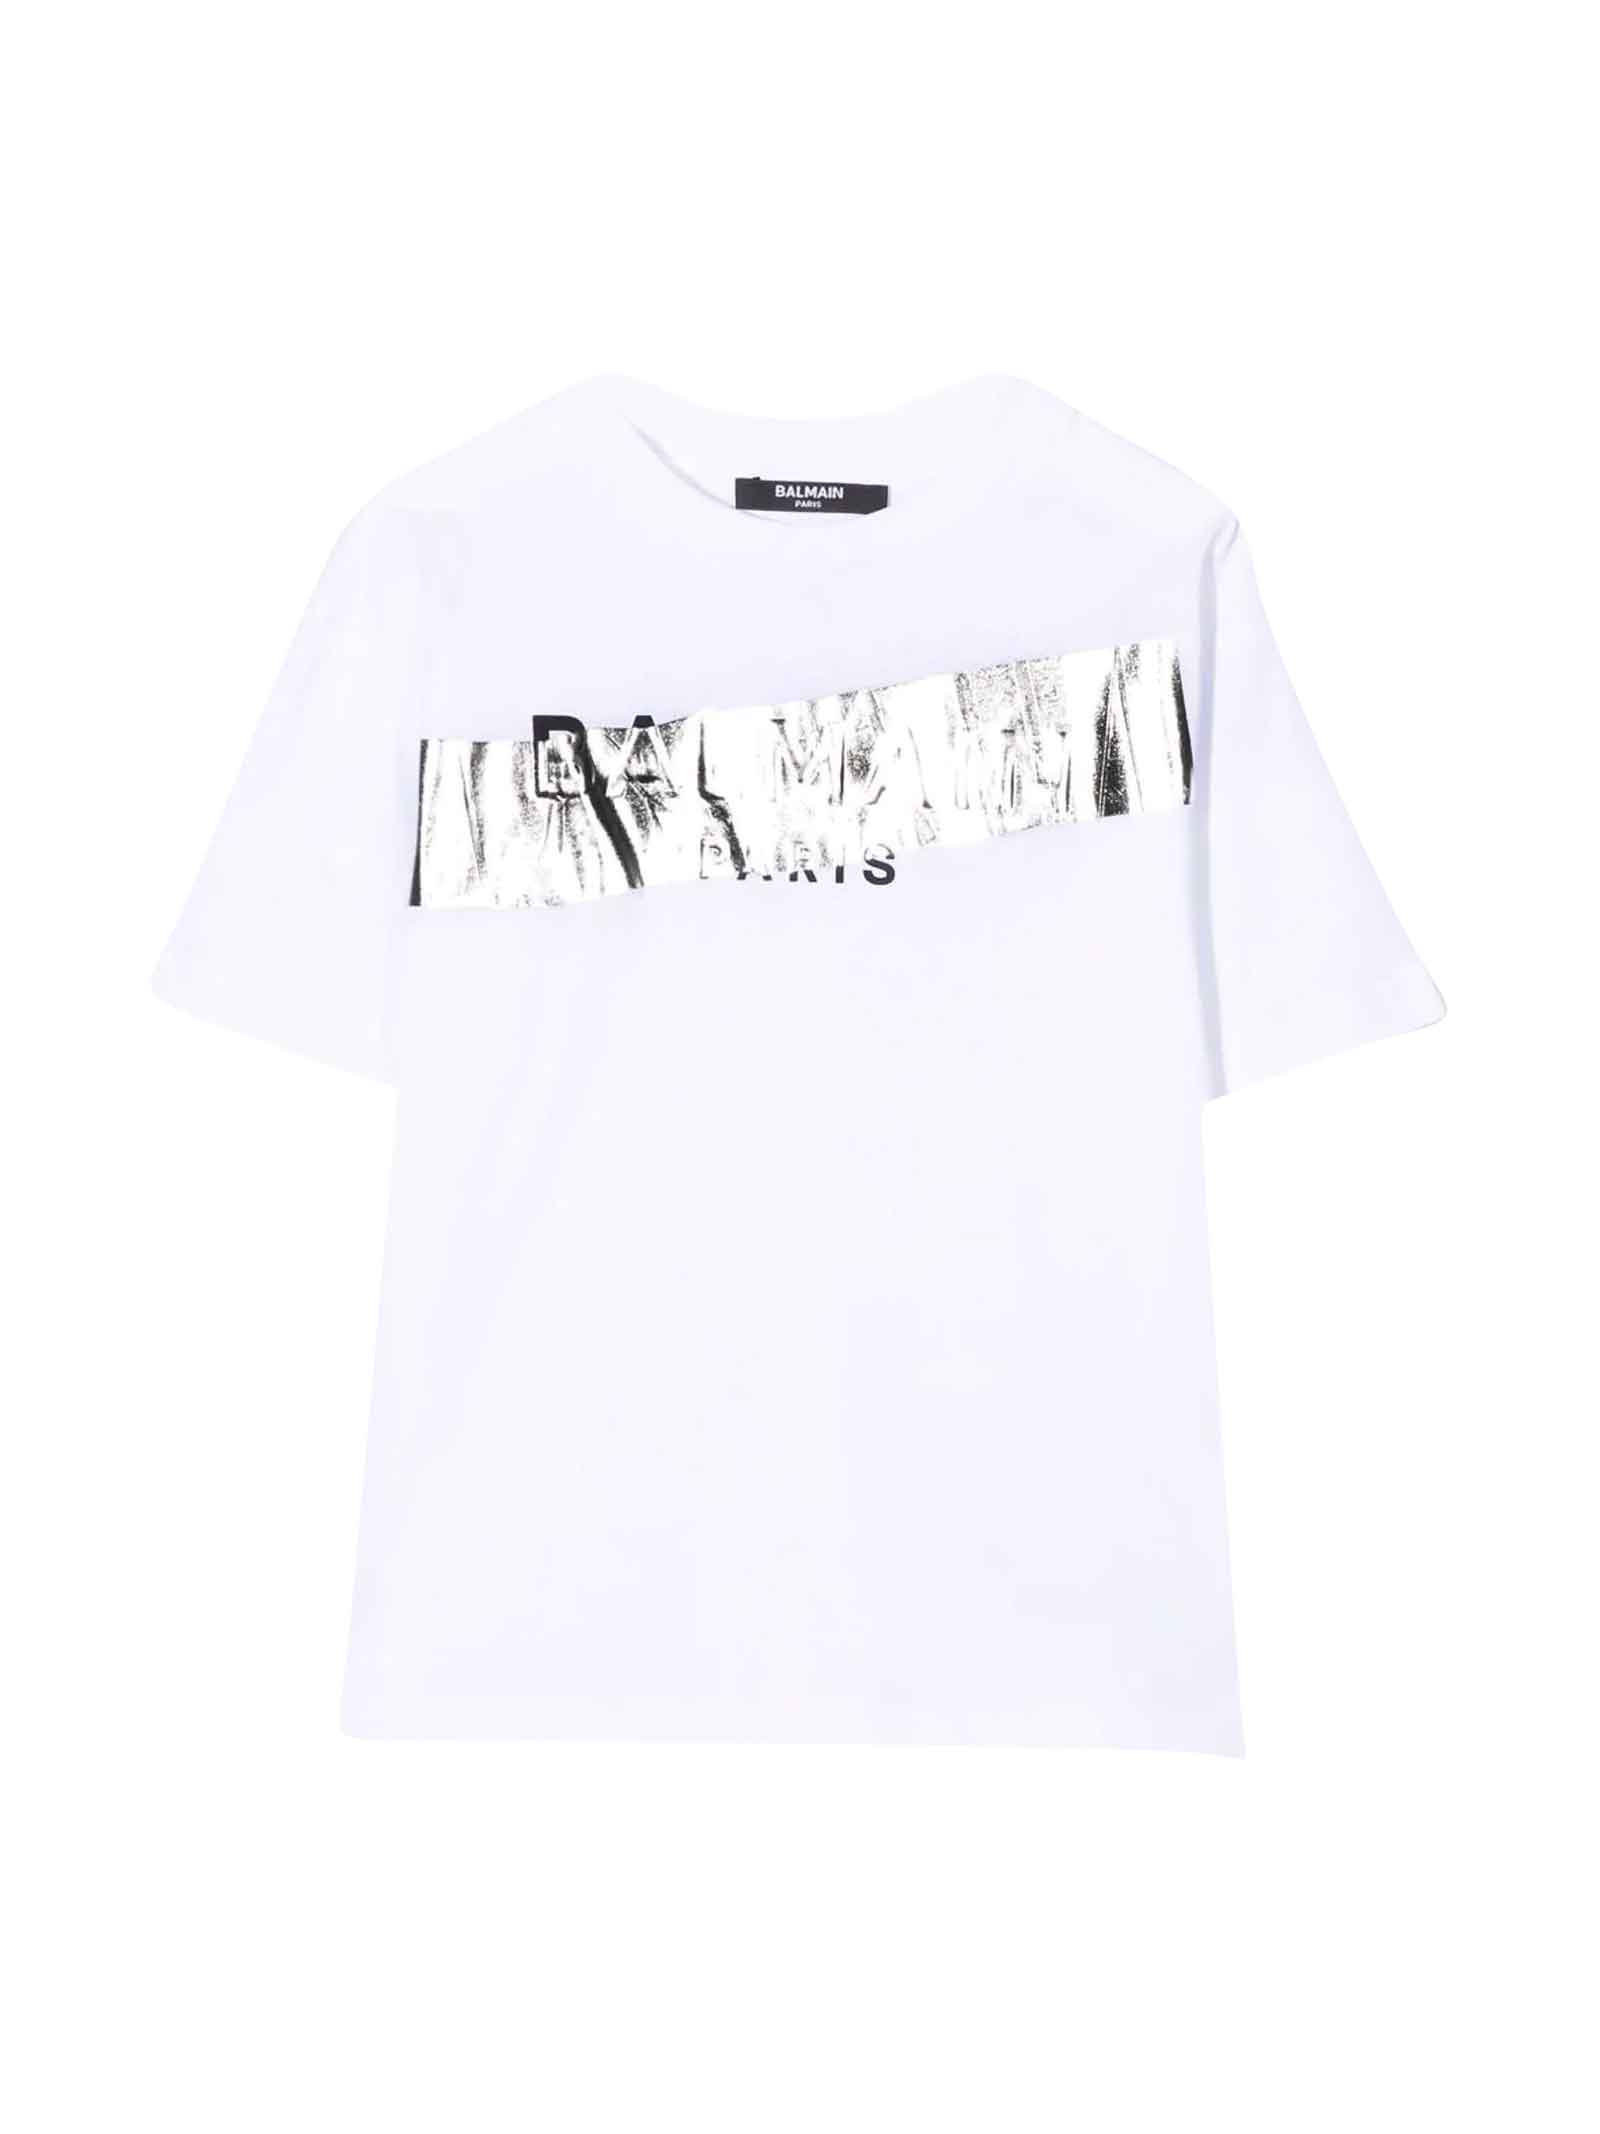 Balmain White T-shirt Teen Unisex